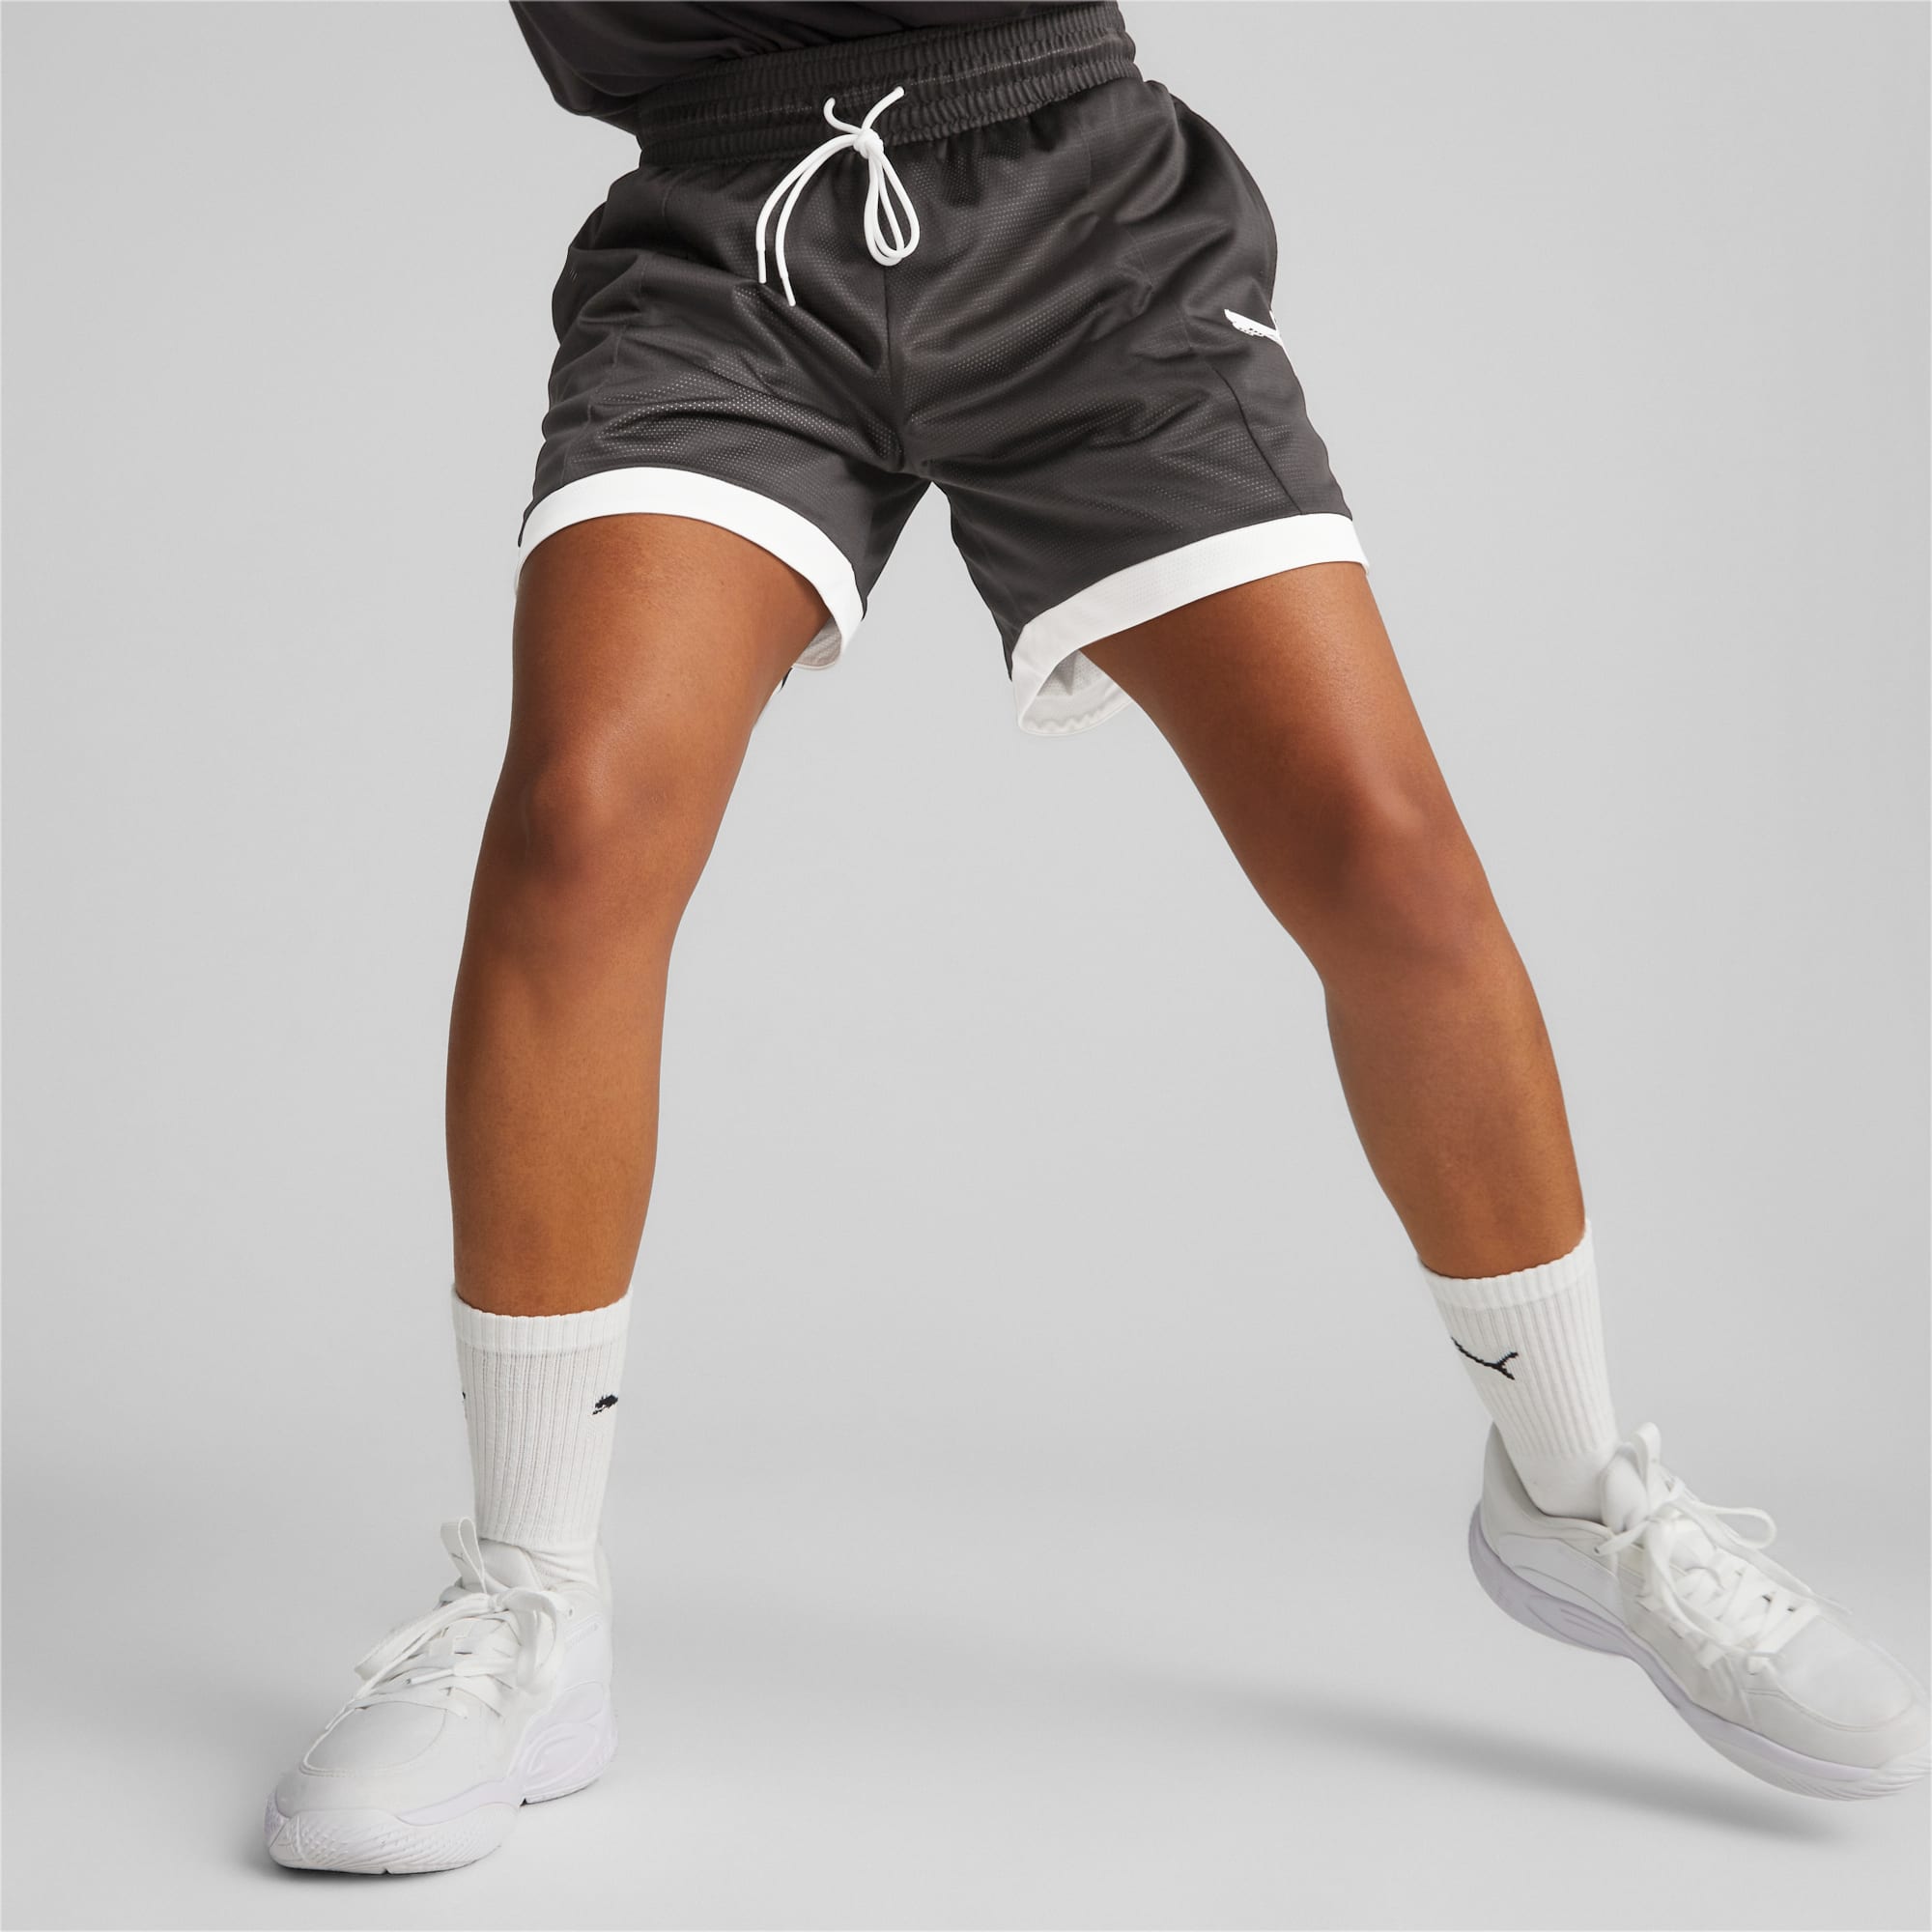 Arc-hitect Women's Mesh Basketball Shorts, PUMA Black